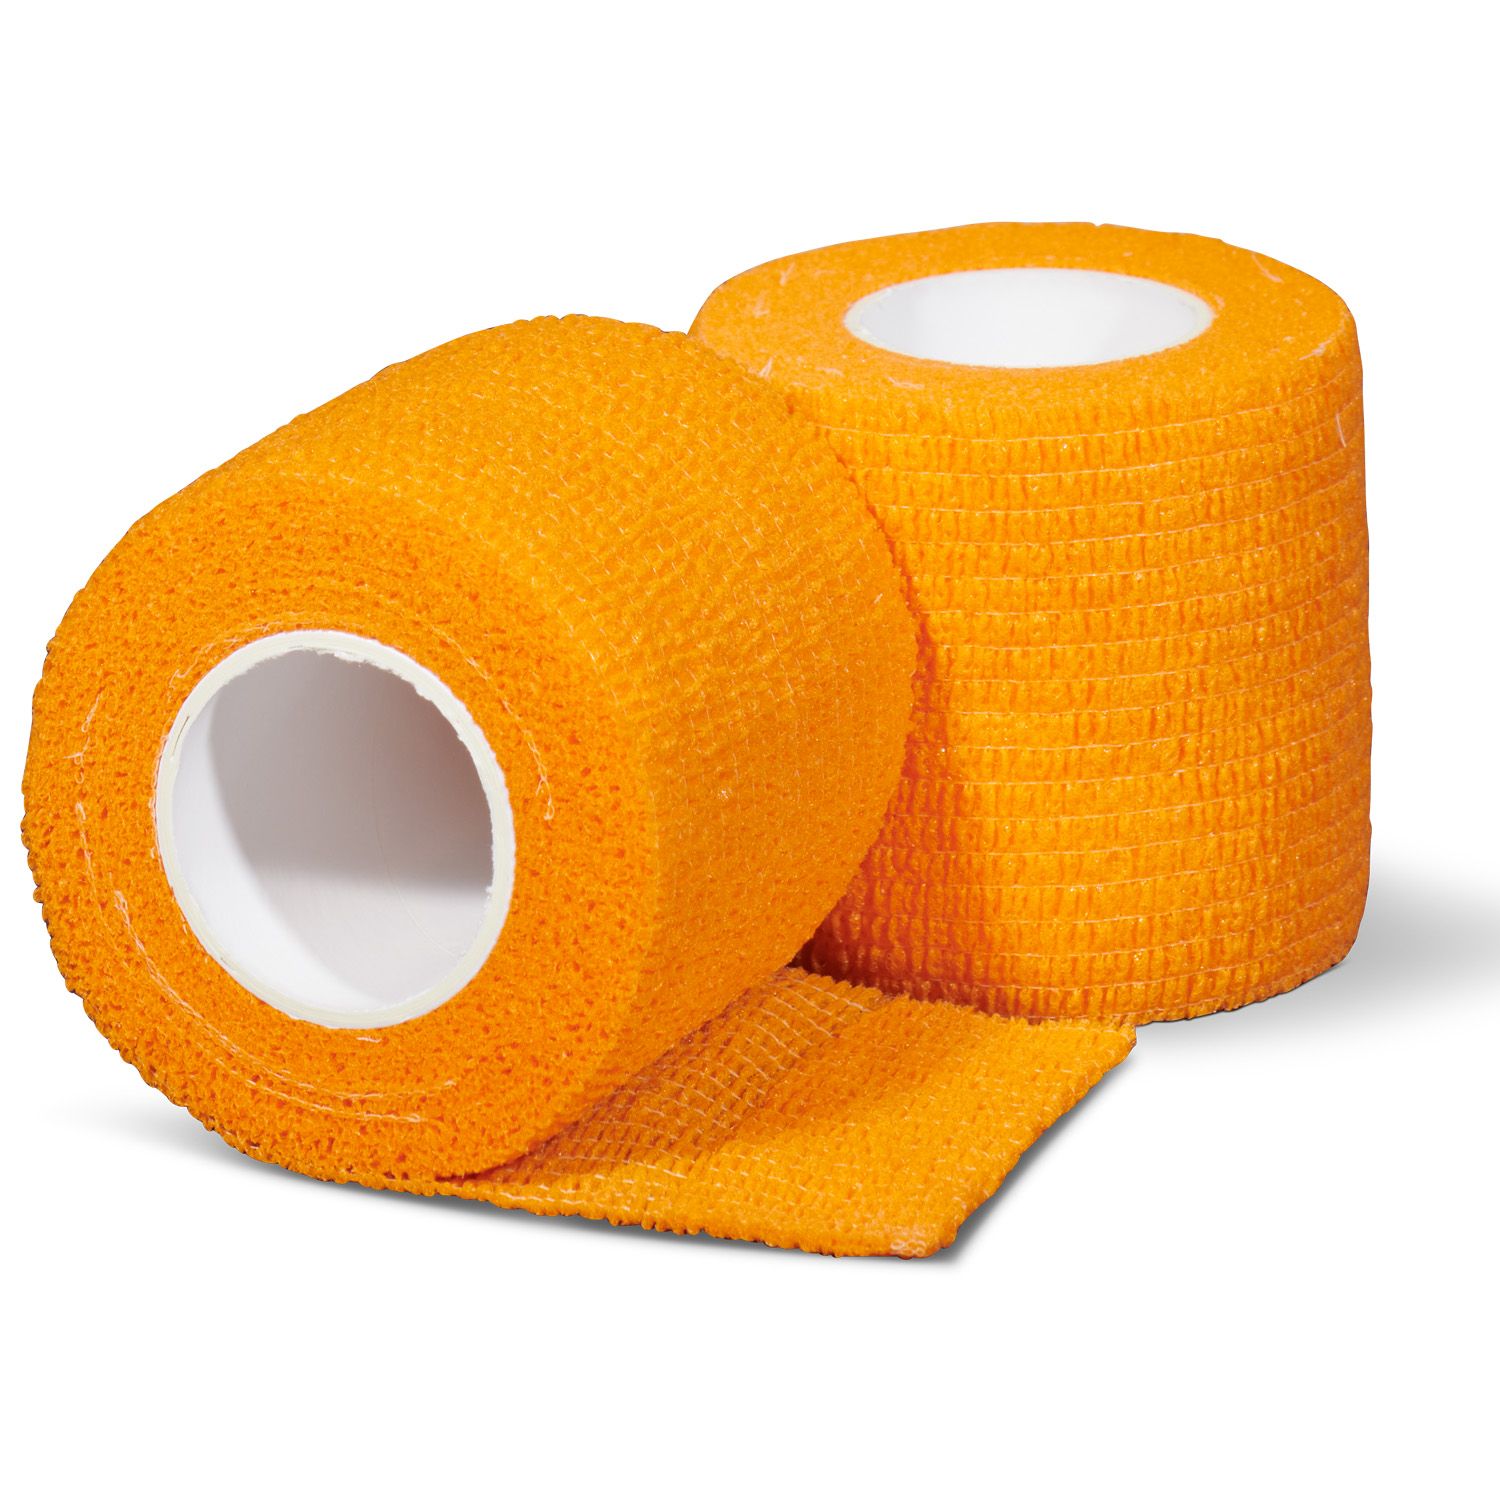 gladiator sports underwrap bandage per 20 rolls orange